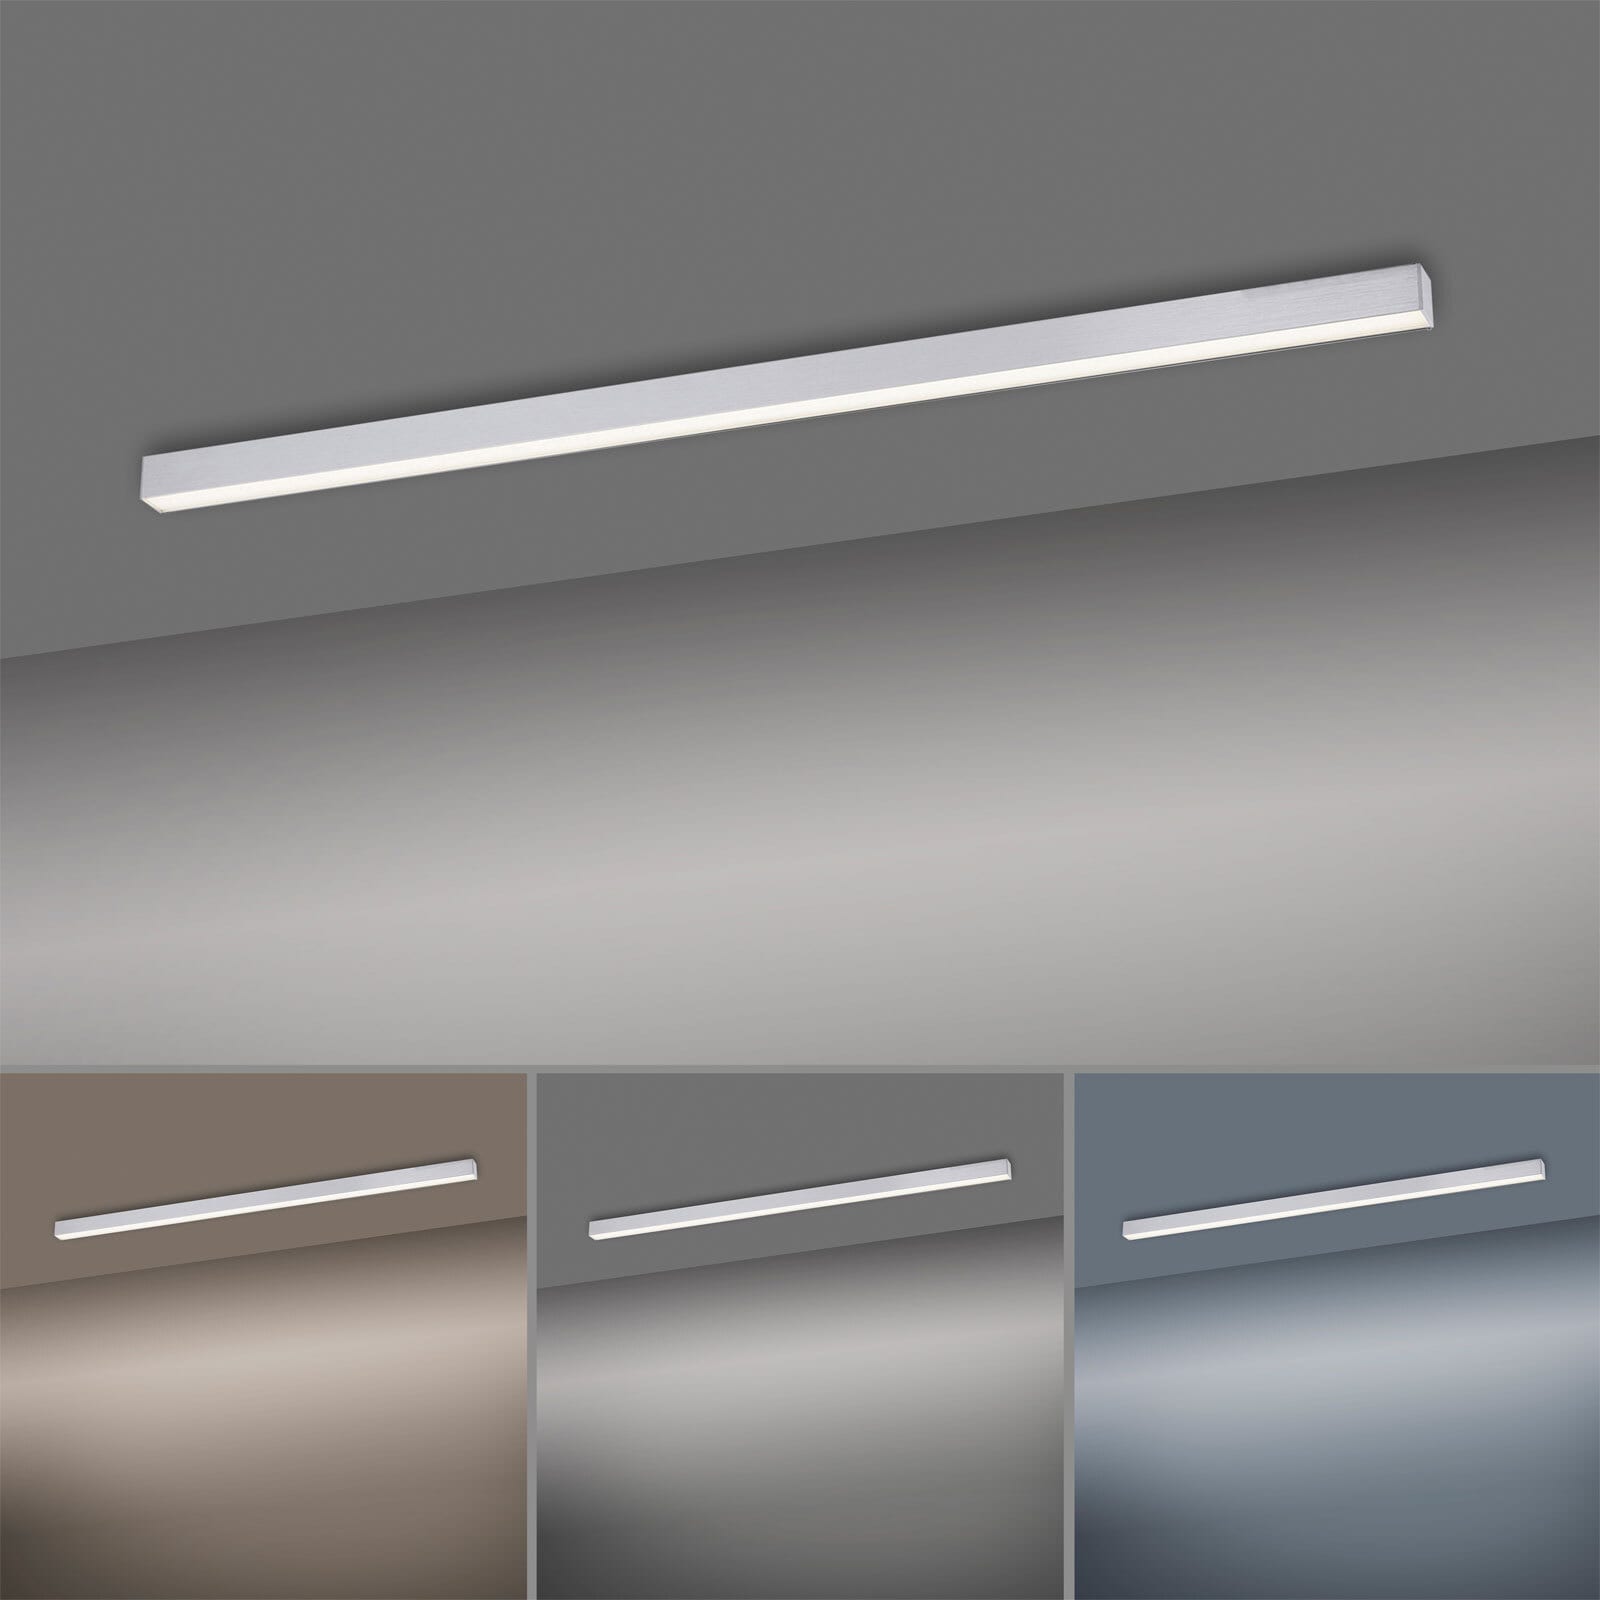 Paul Neuhaus LED Deckenlampe PURE-LINES 110 x 4 cm alufarbig